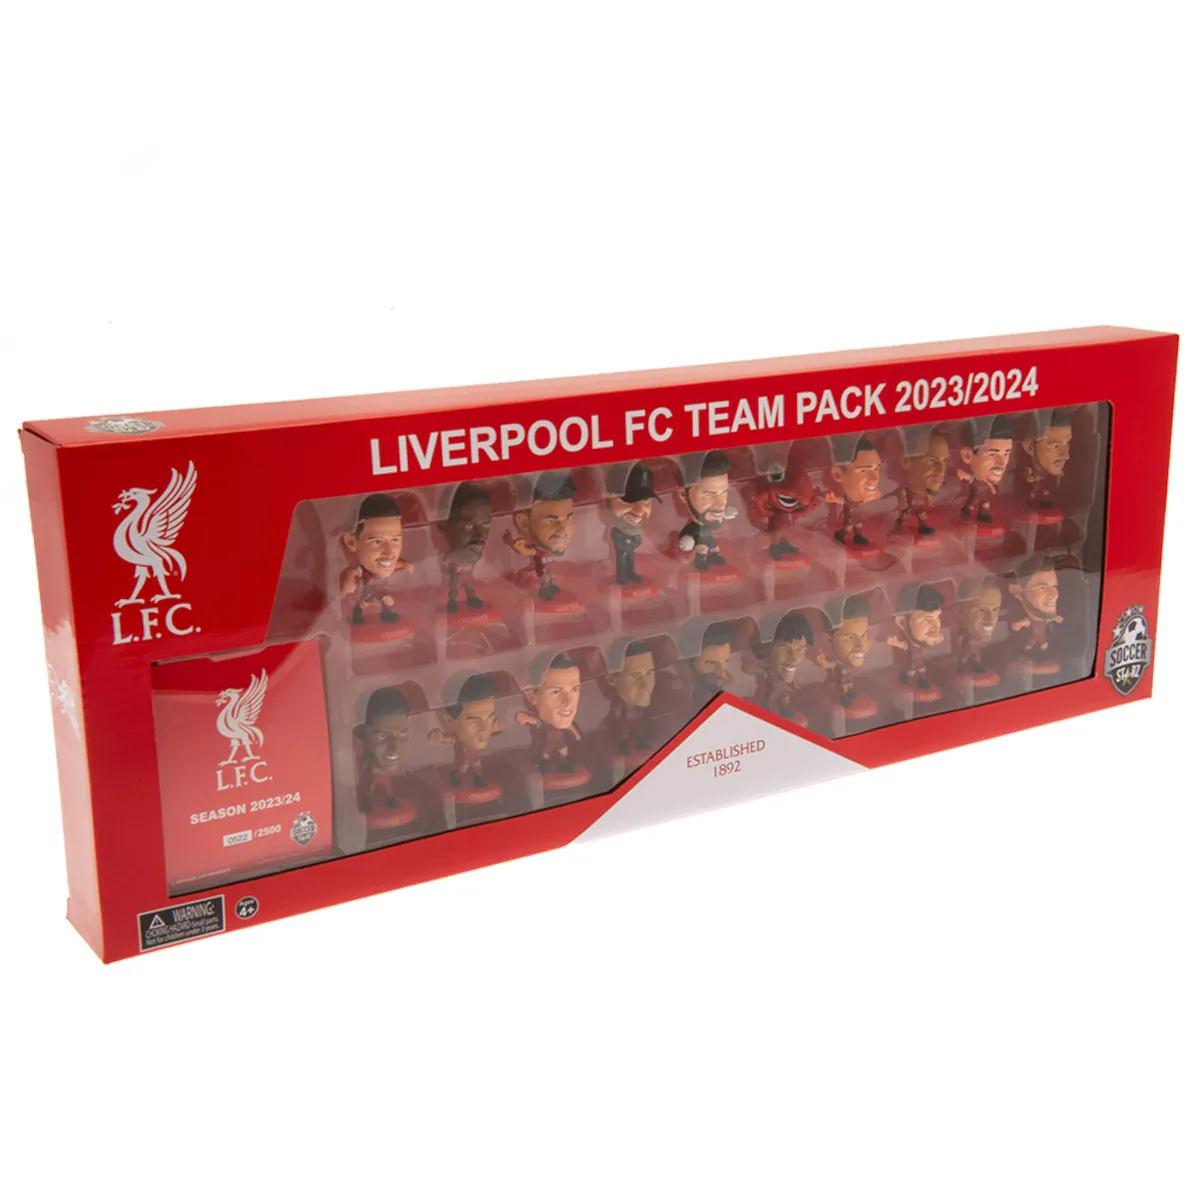 TM-03694 Liverpool FC SoccerStarz 20 Player Team Pack 2023-24 Season Collectable Figures Box